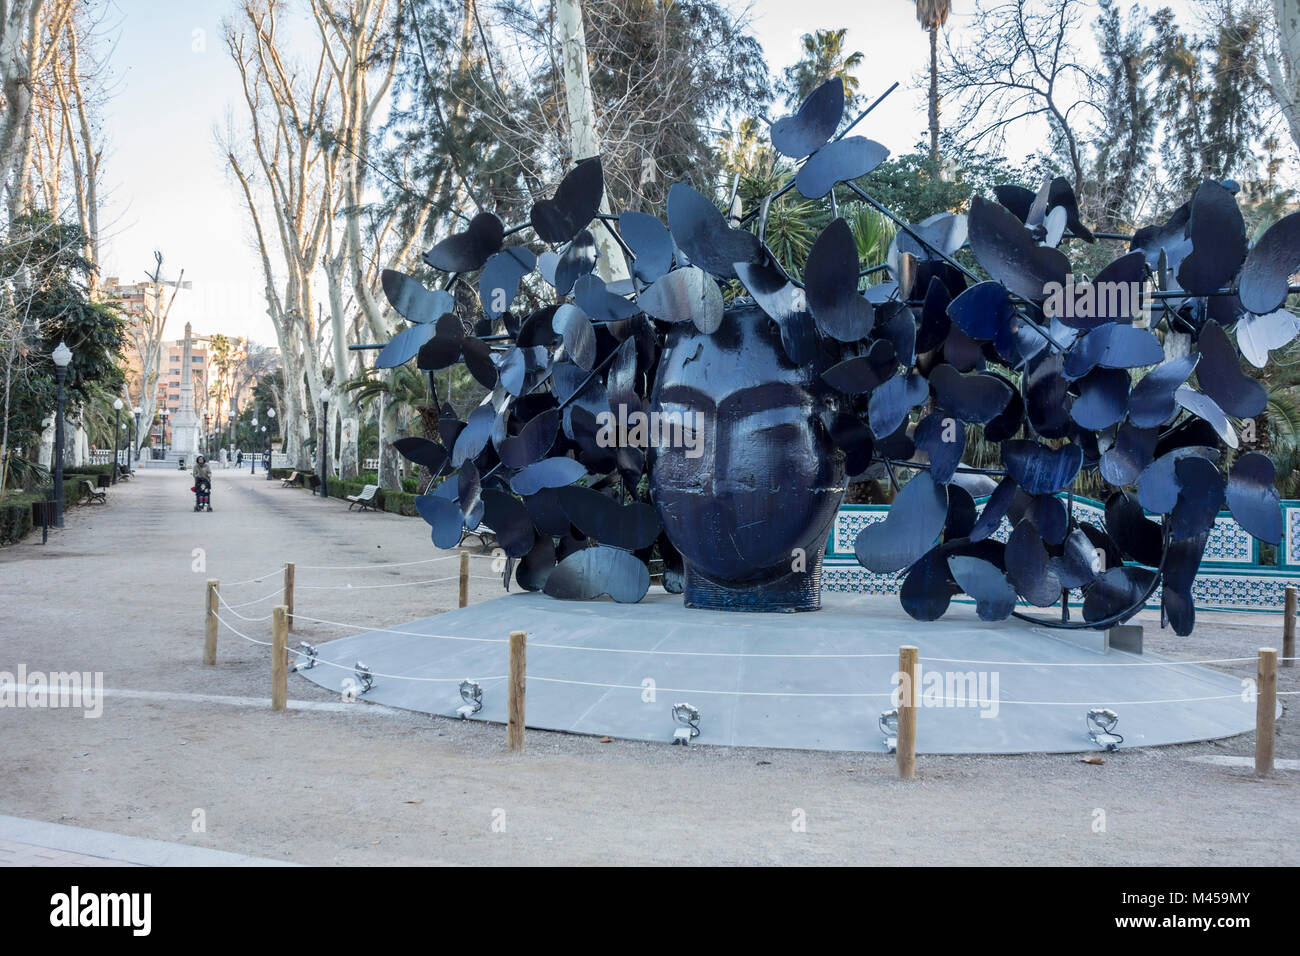 Park, Parque Ribalta, public garden city center,sculpture Butterflies by artist Manolo Valdes.Castellon,Spain. Stock Photo